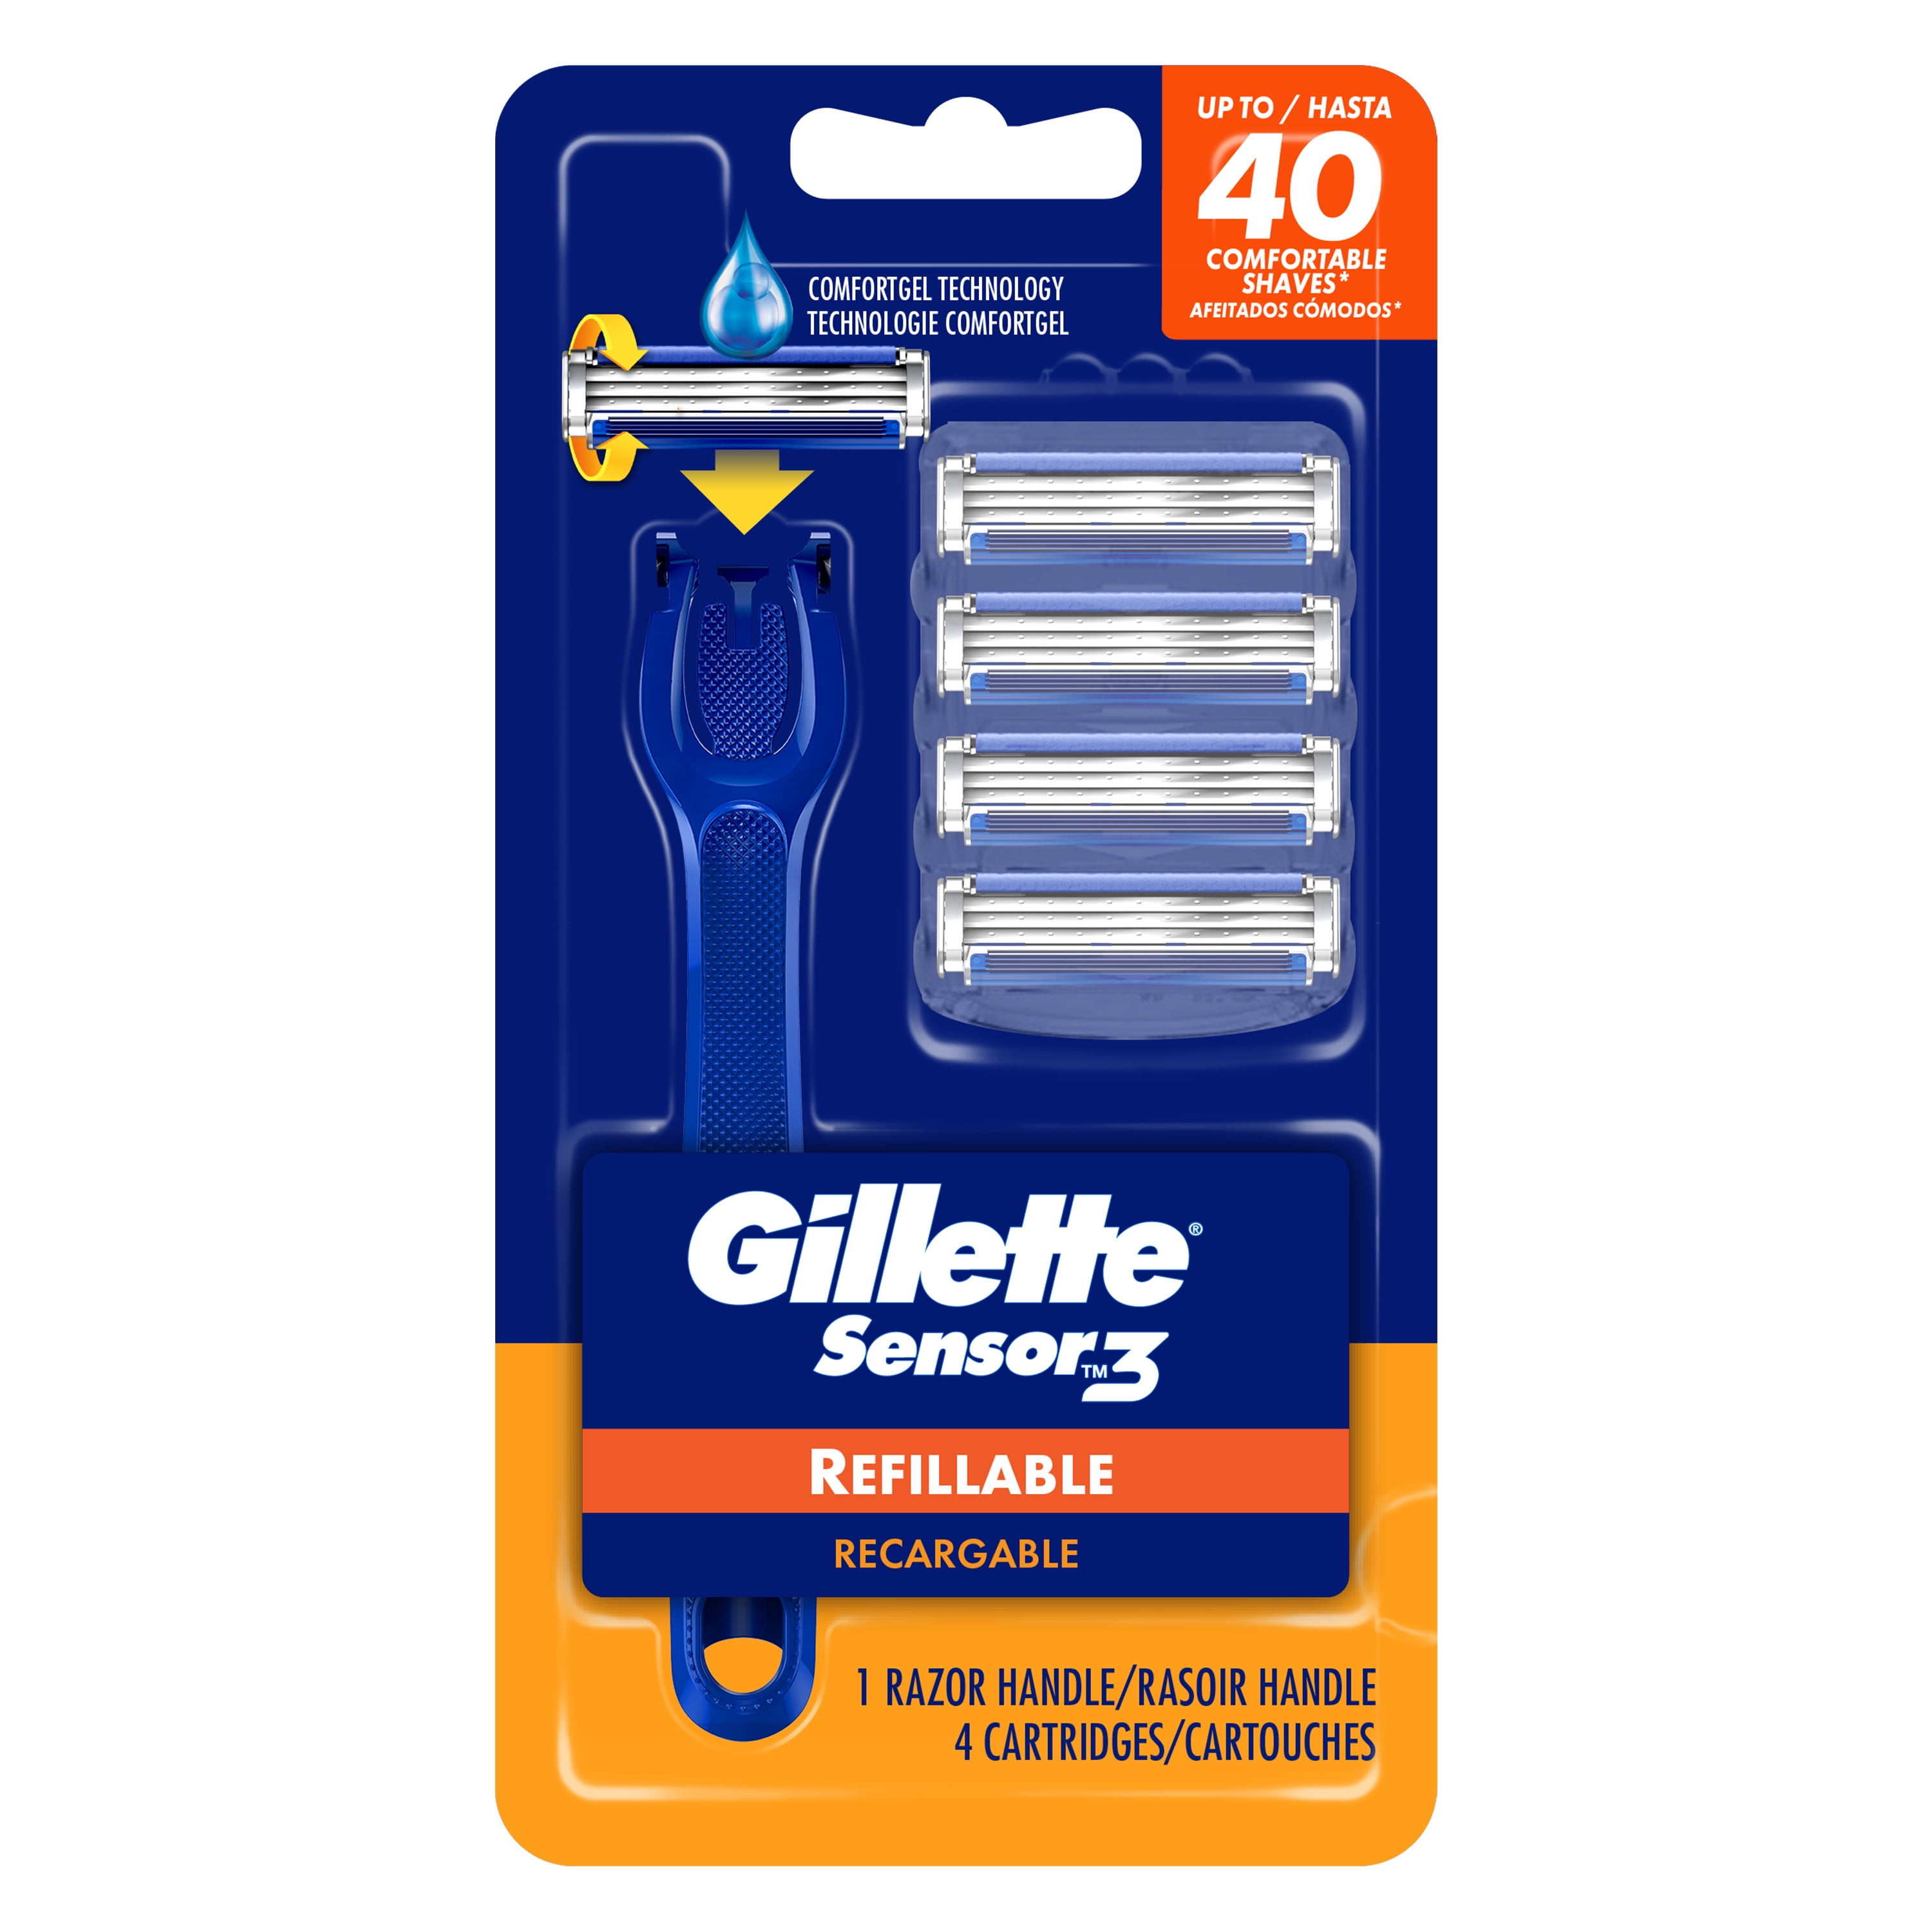 Gillette Sensor3 Refillable Razor for Men, Includes 1 Shaving Razor Handle and 4 Razor Blade Refills